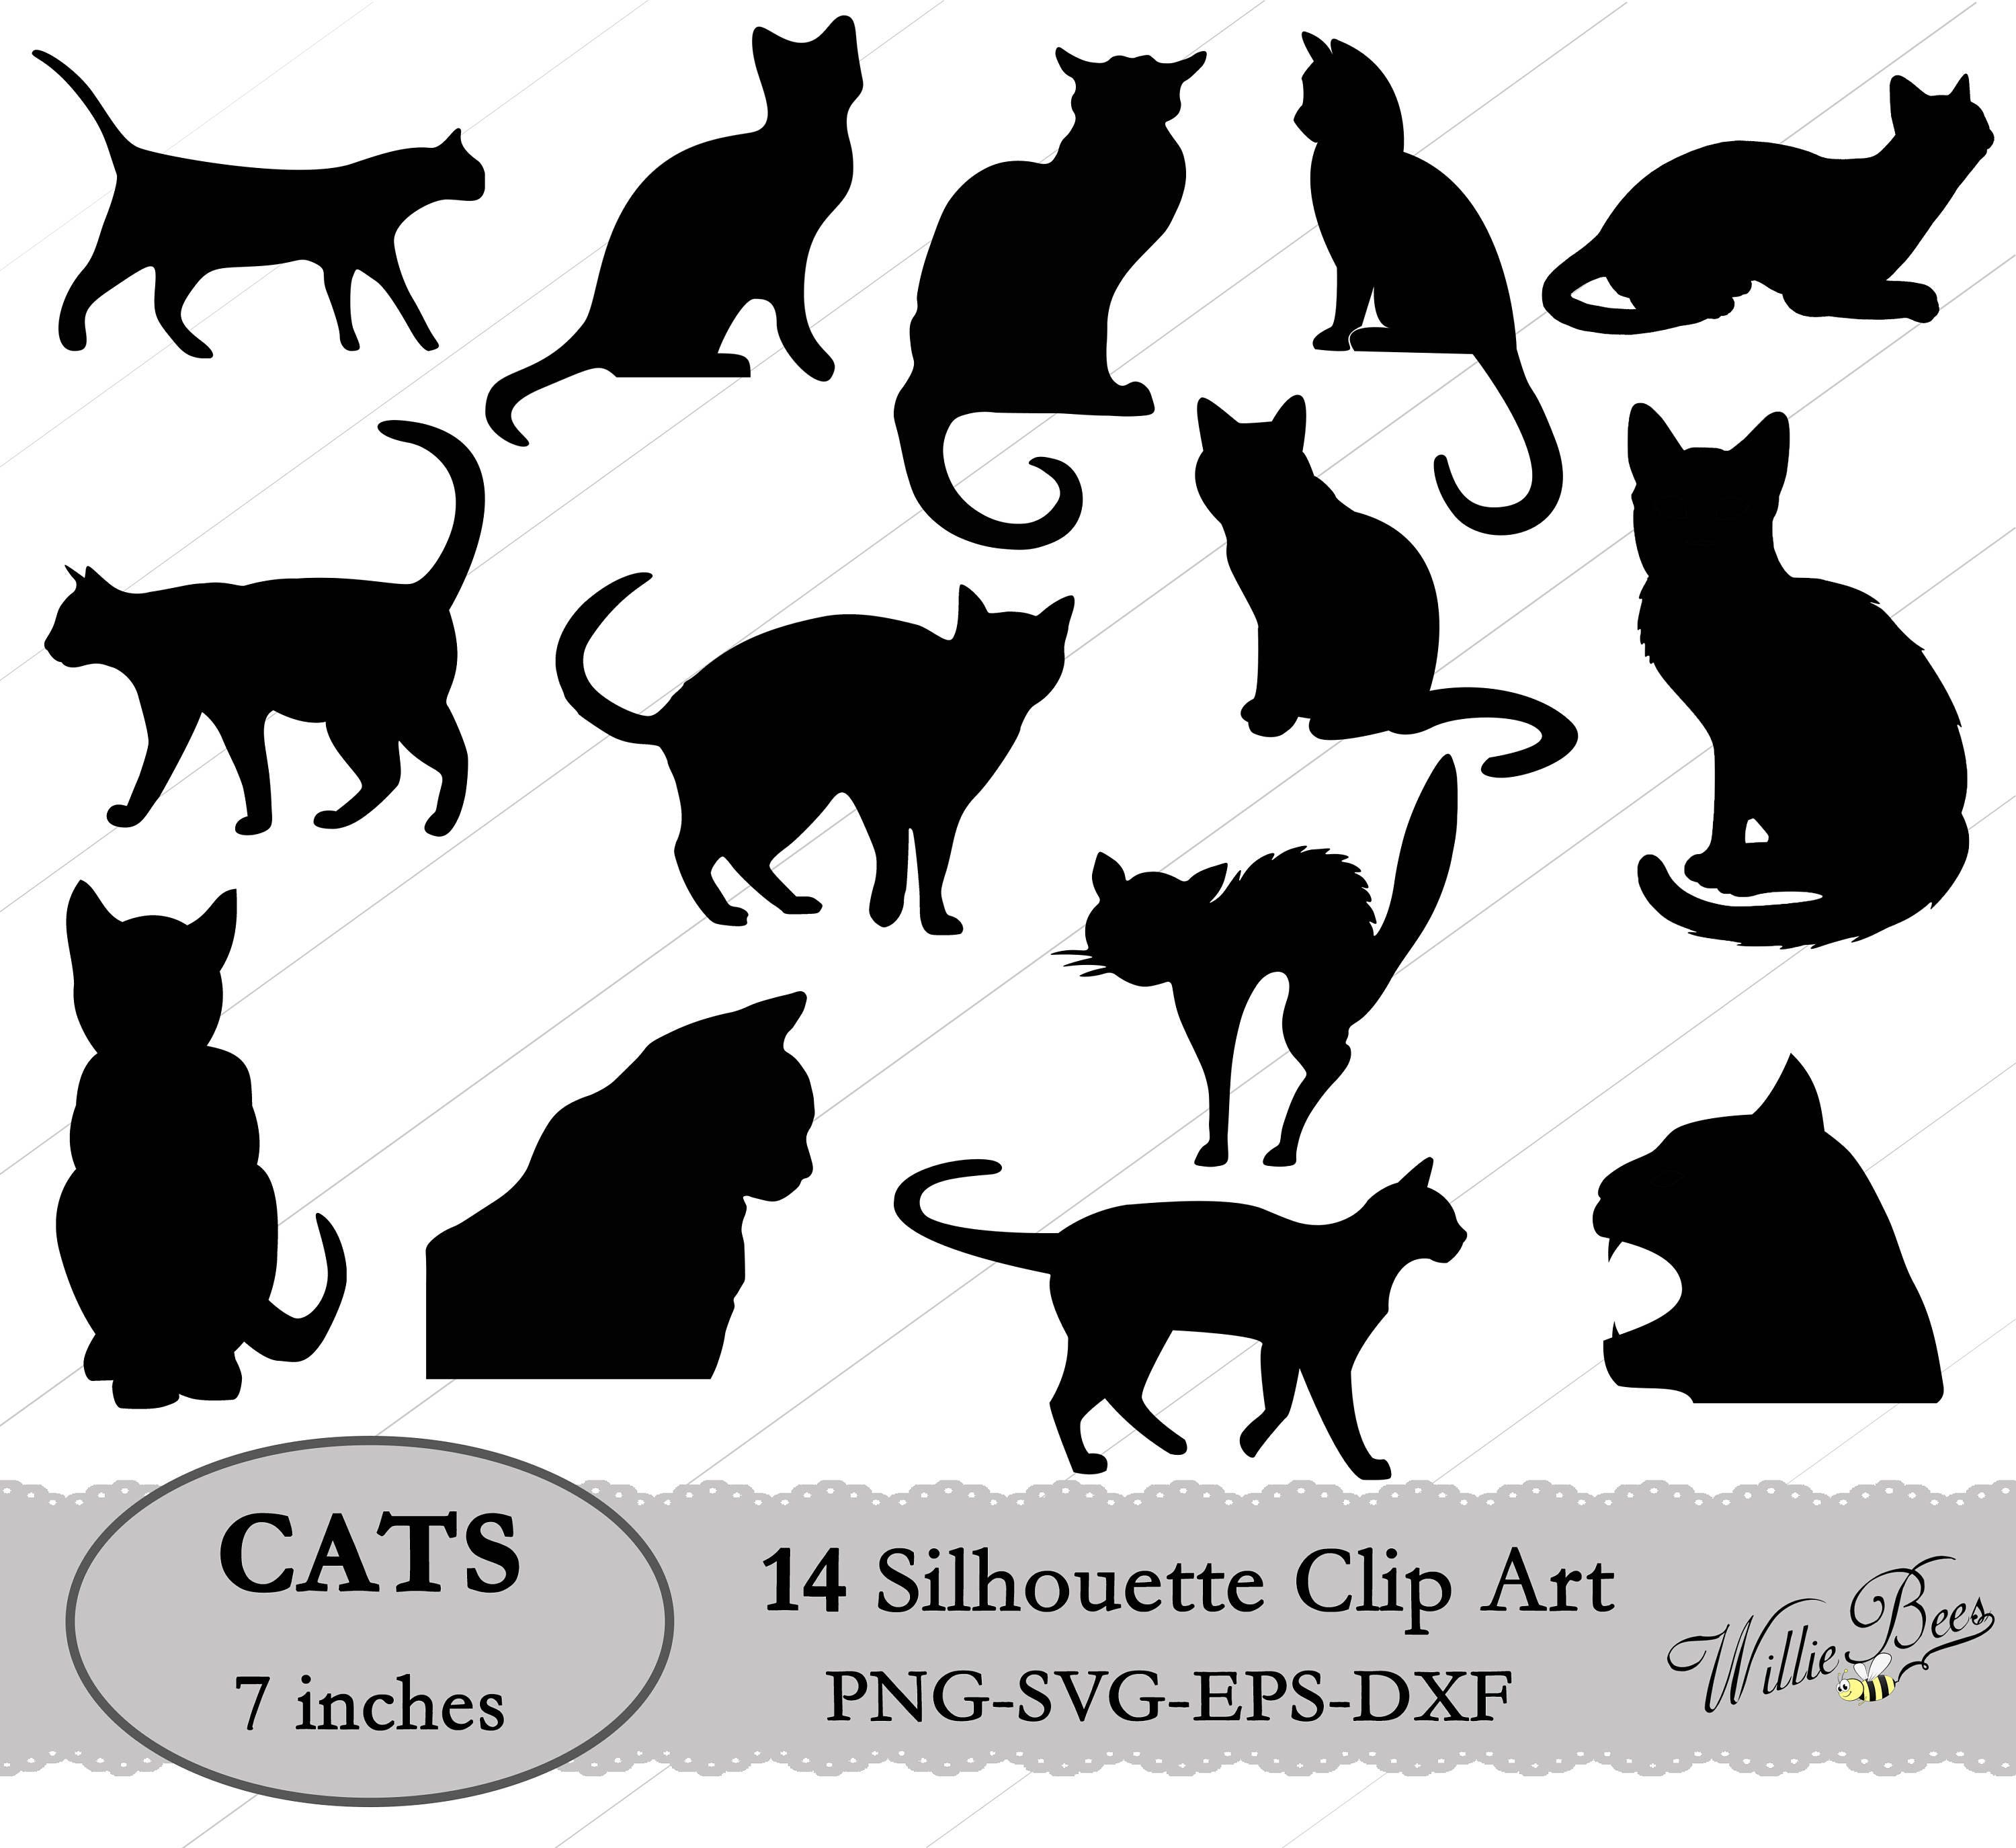 Download Cat SVG, Feline SVG, Cat Silhouette Clip Art, Domestic Cat ...